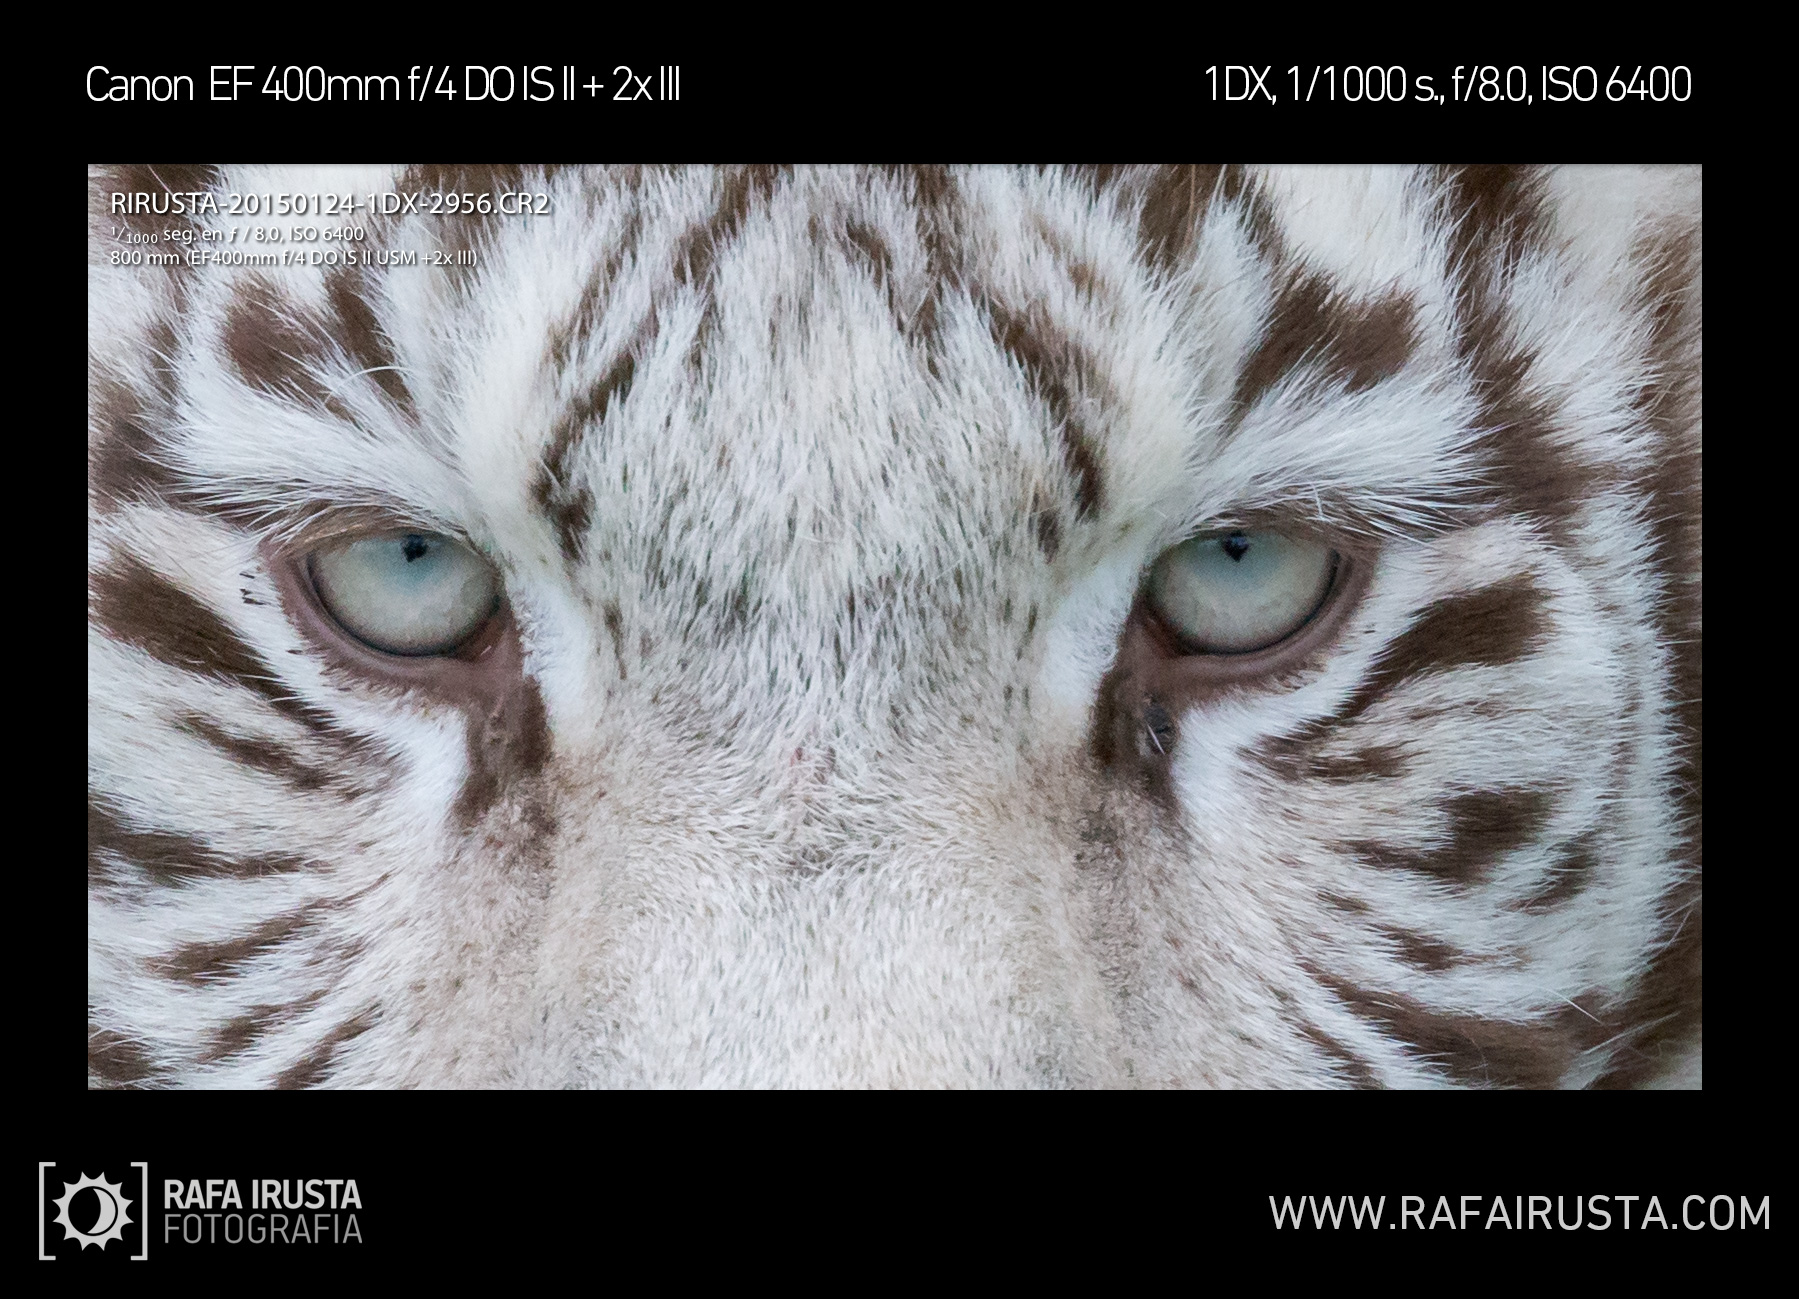 RIRUSTA-20150124-1DX-2956_400+2x-tigre